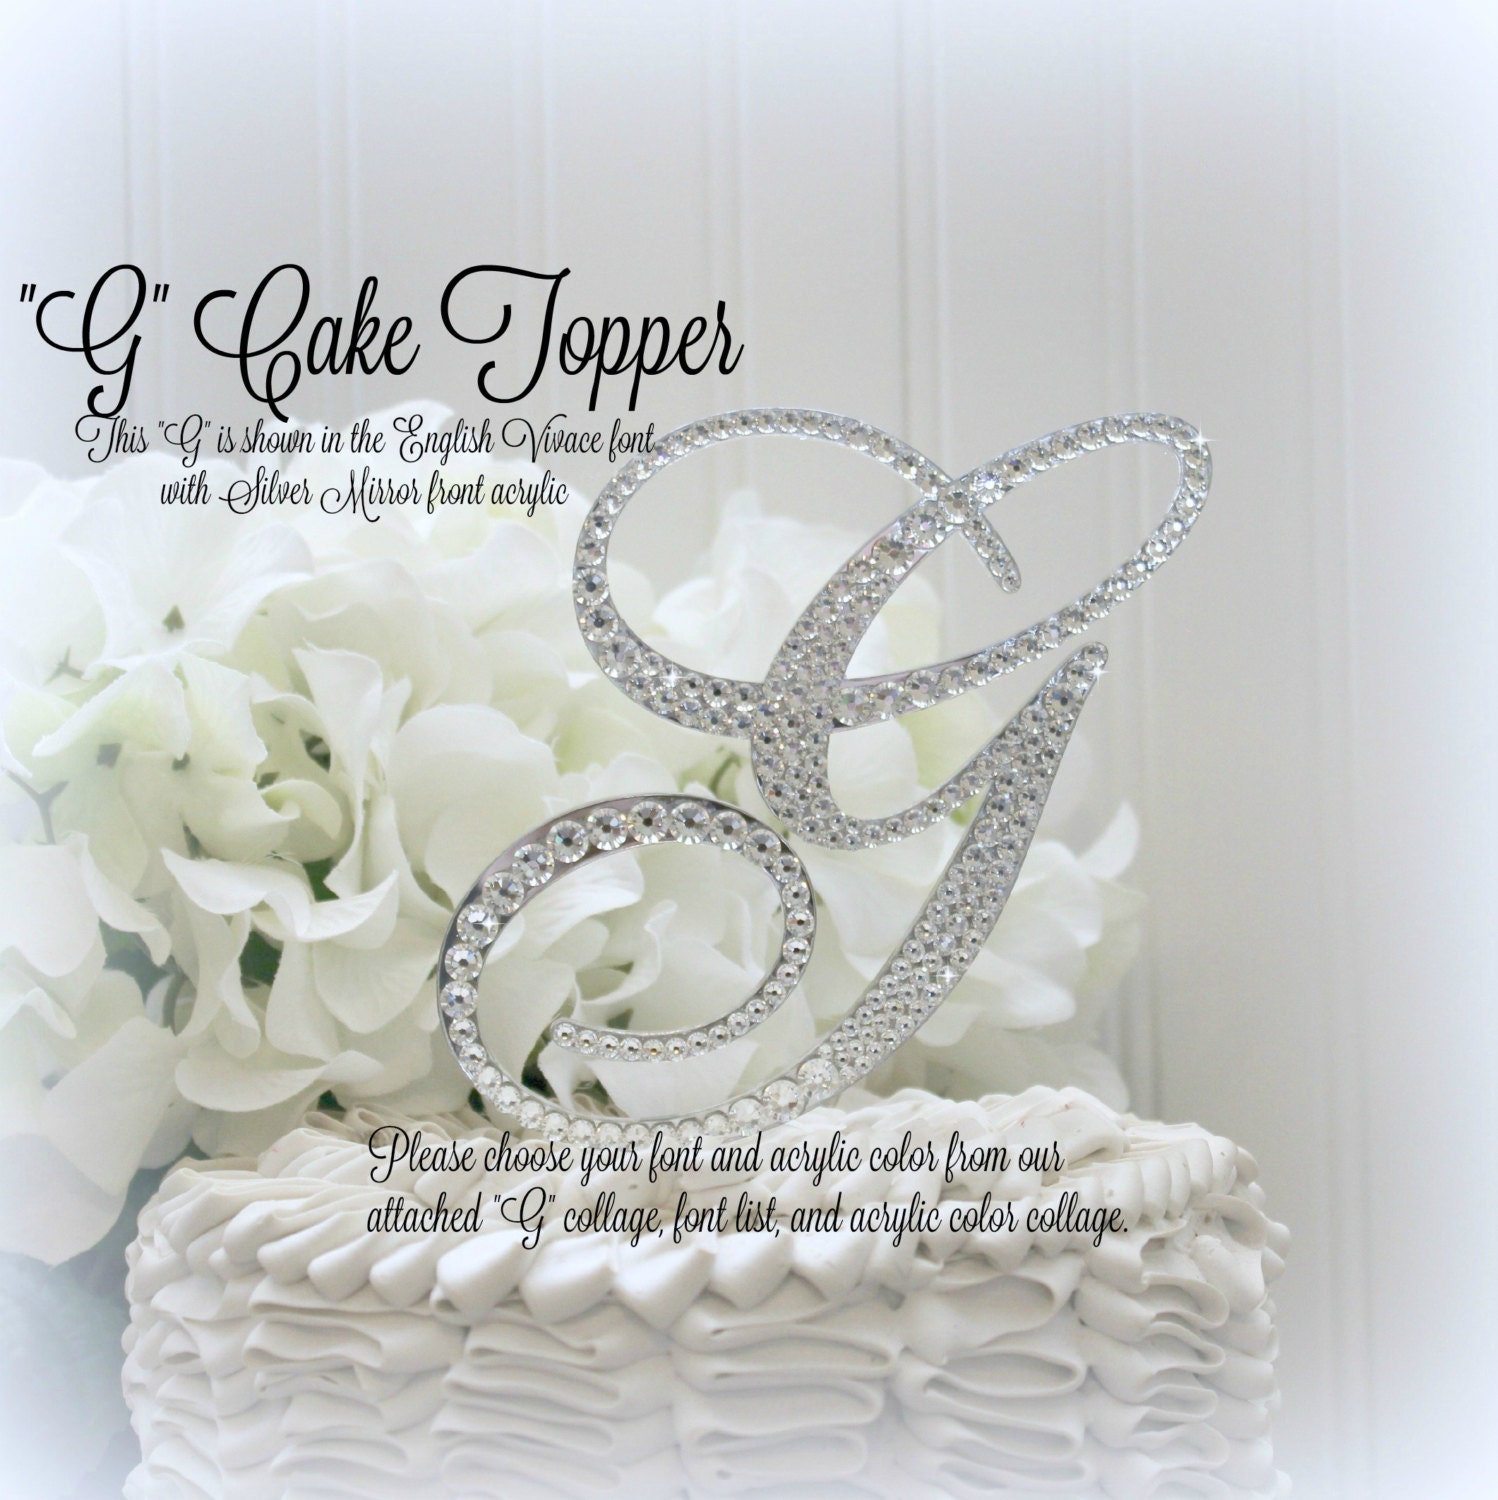 Rhinestone Silver Crystal Covered Monogram Letter Initial Wedding Cake Topper 